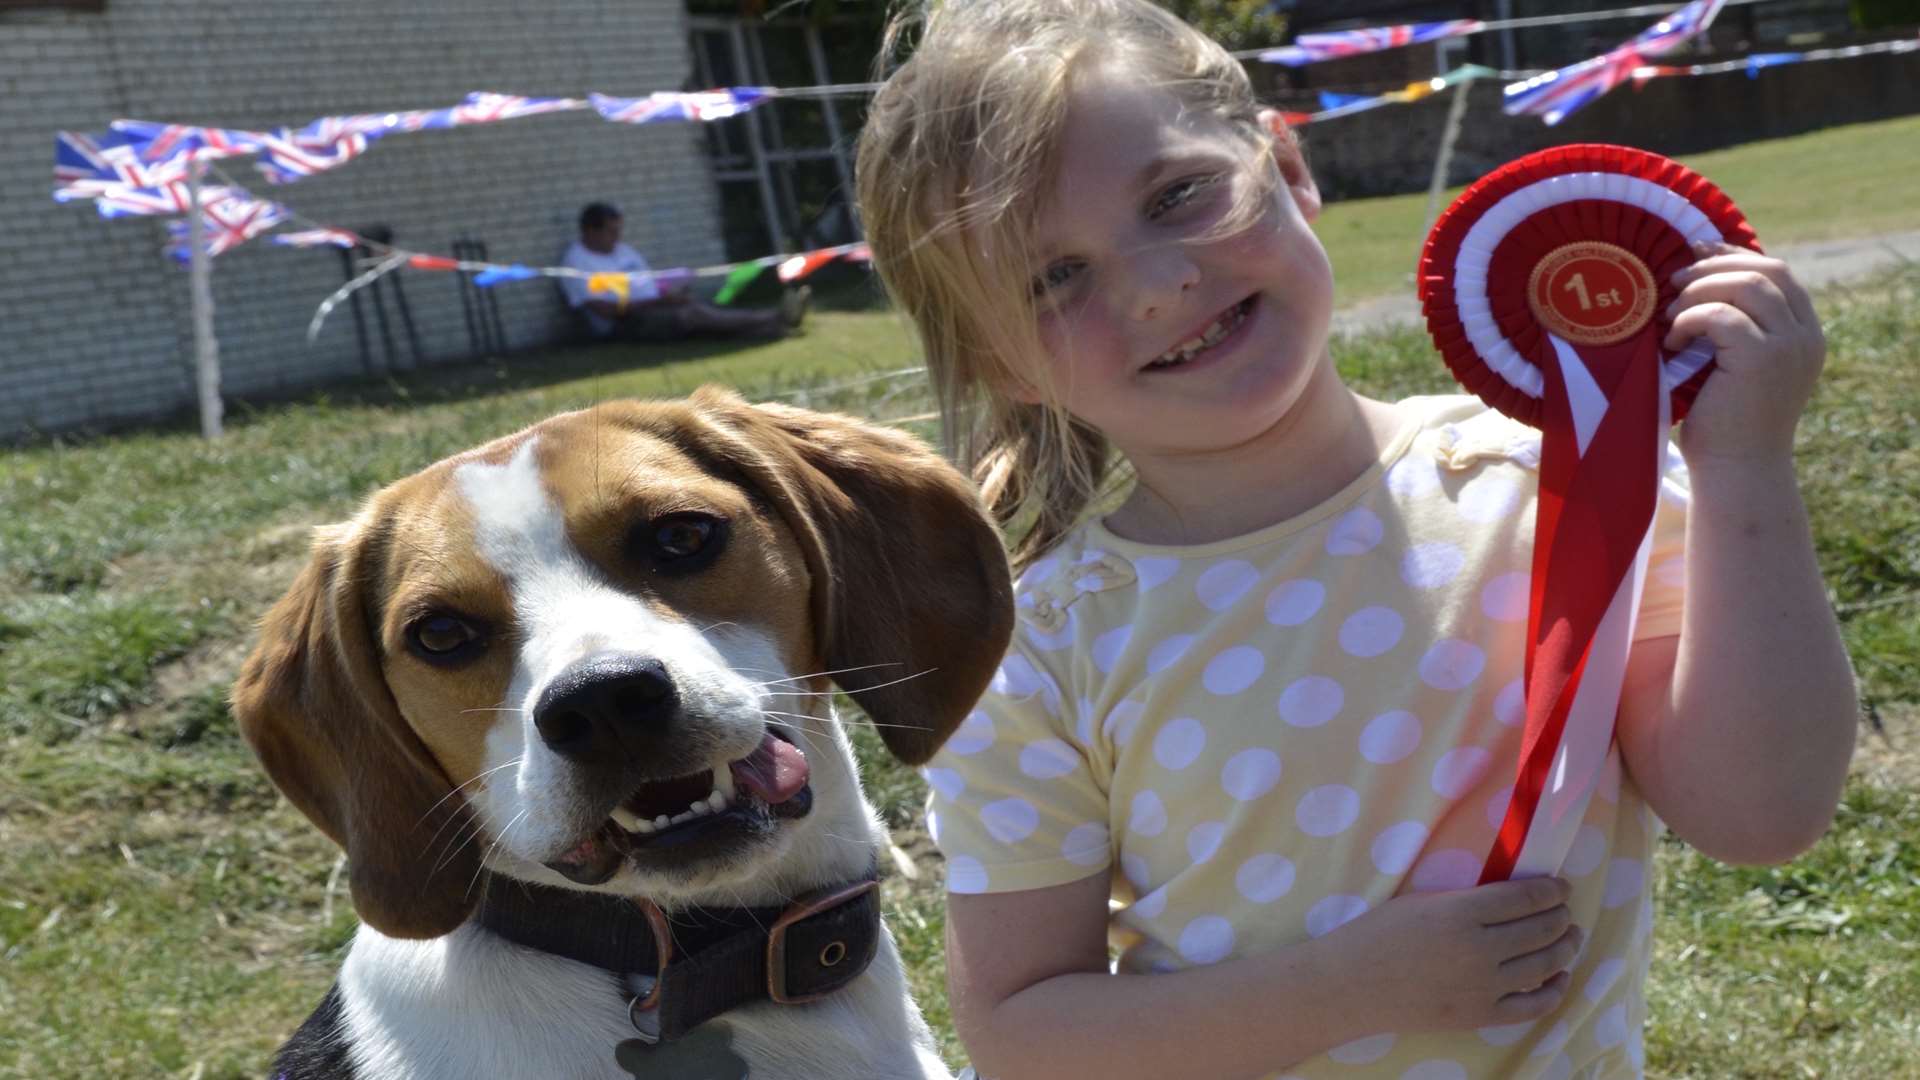 Kobel Baker, 7, saw her Beagle scooping a top prize